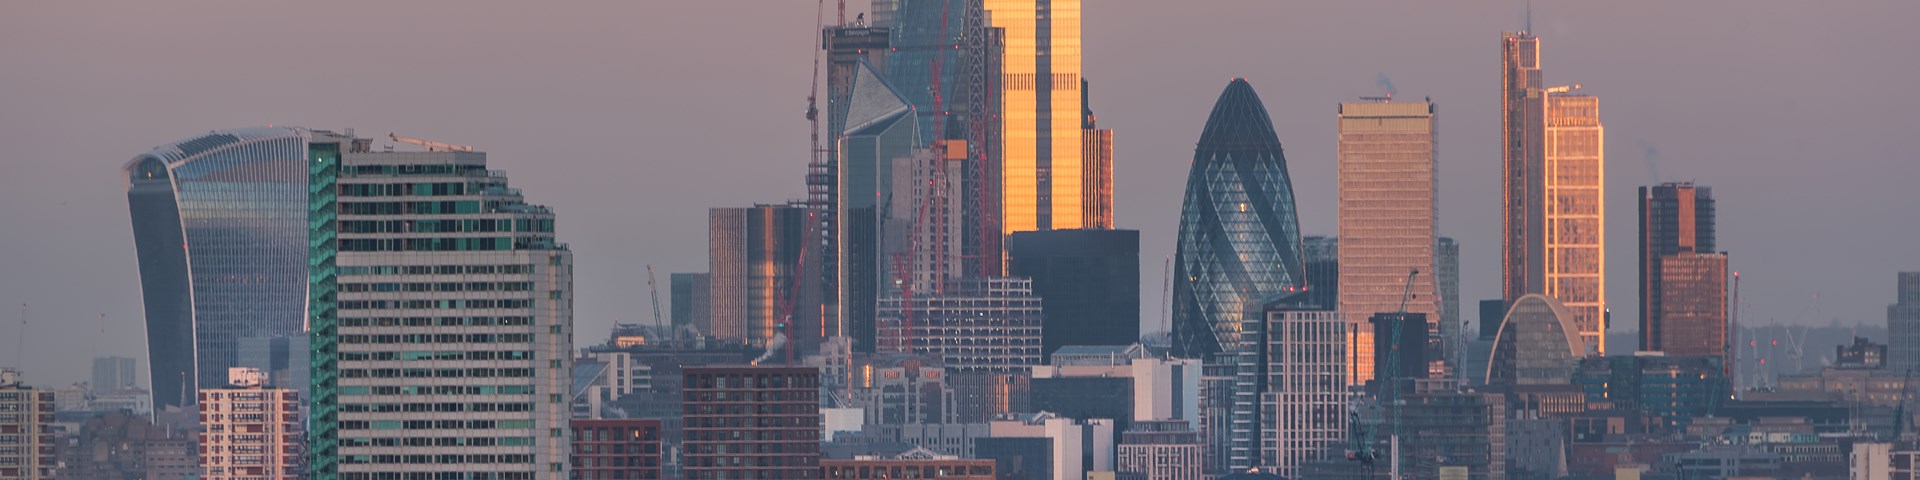 Sunrise over London financial district skyline buildings